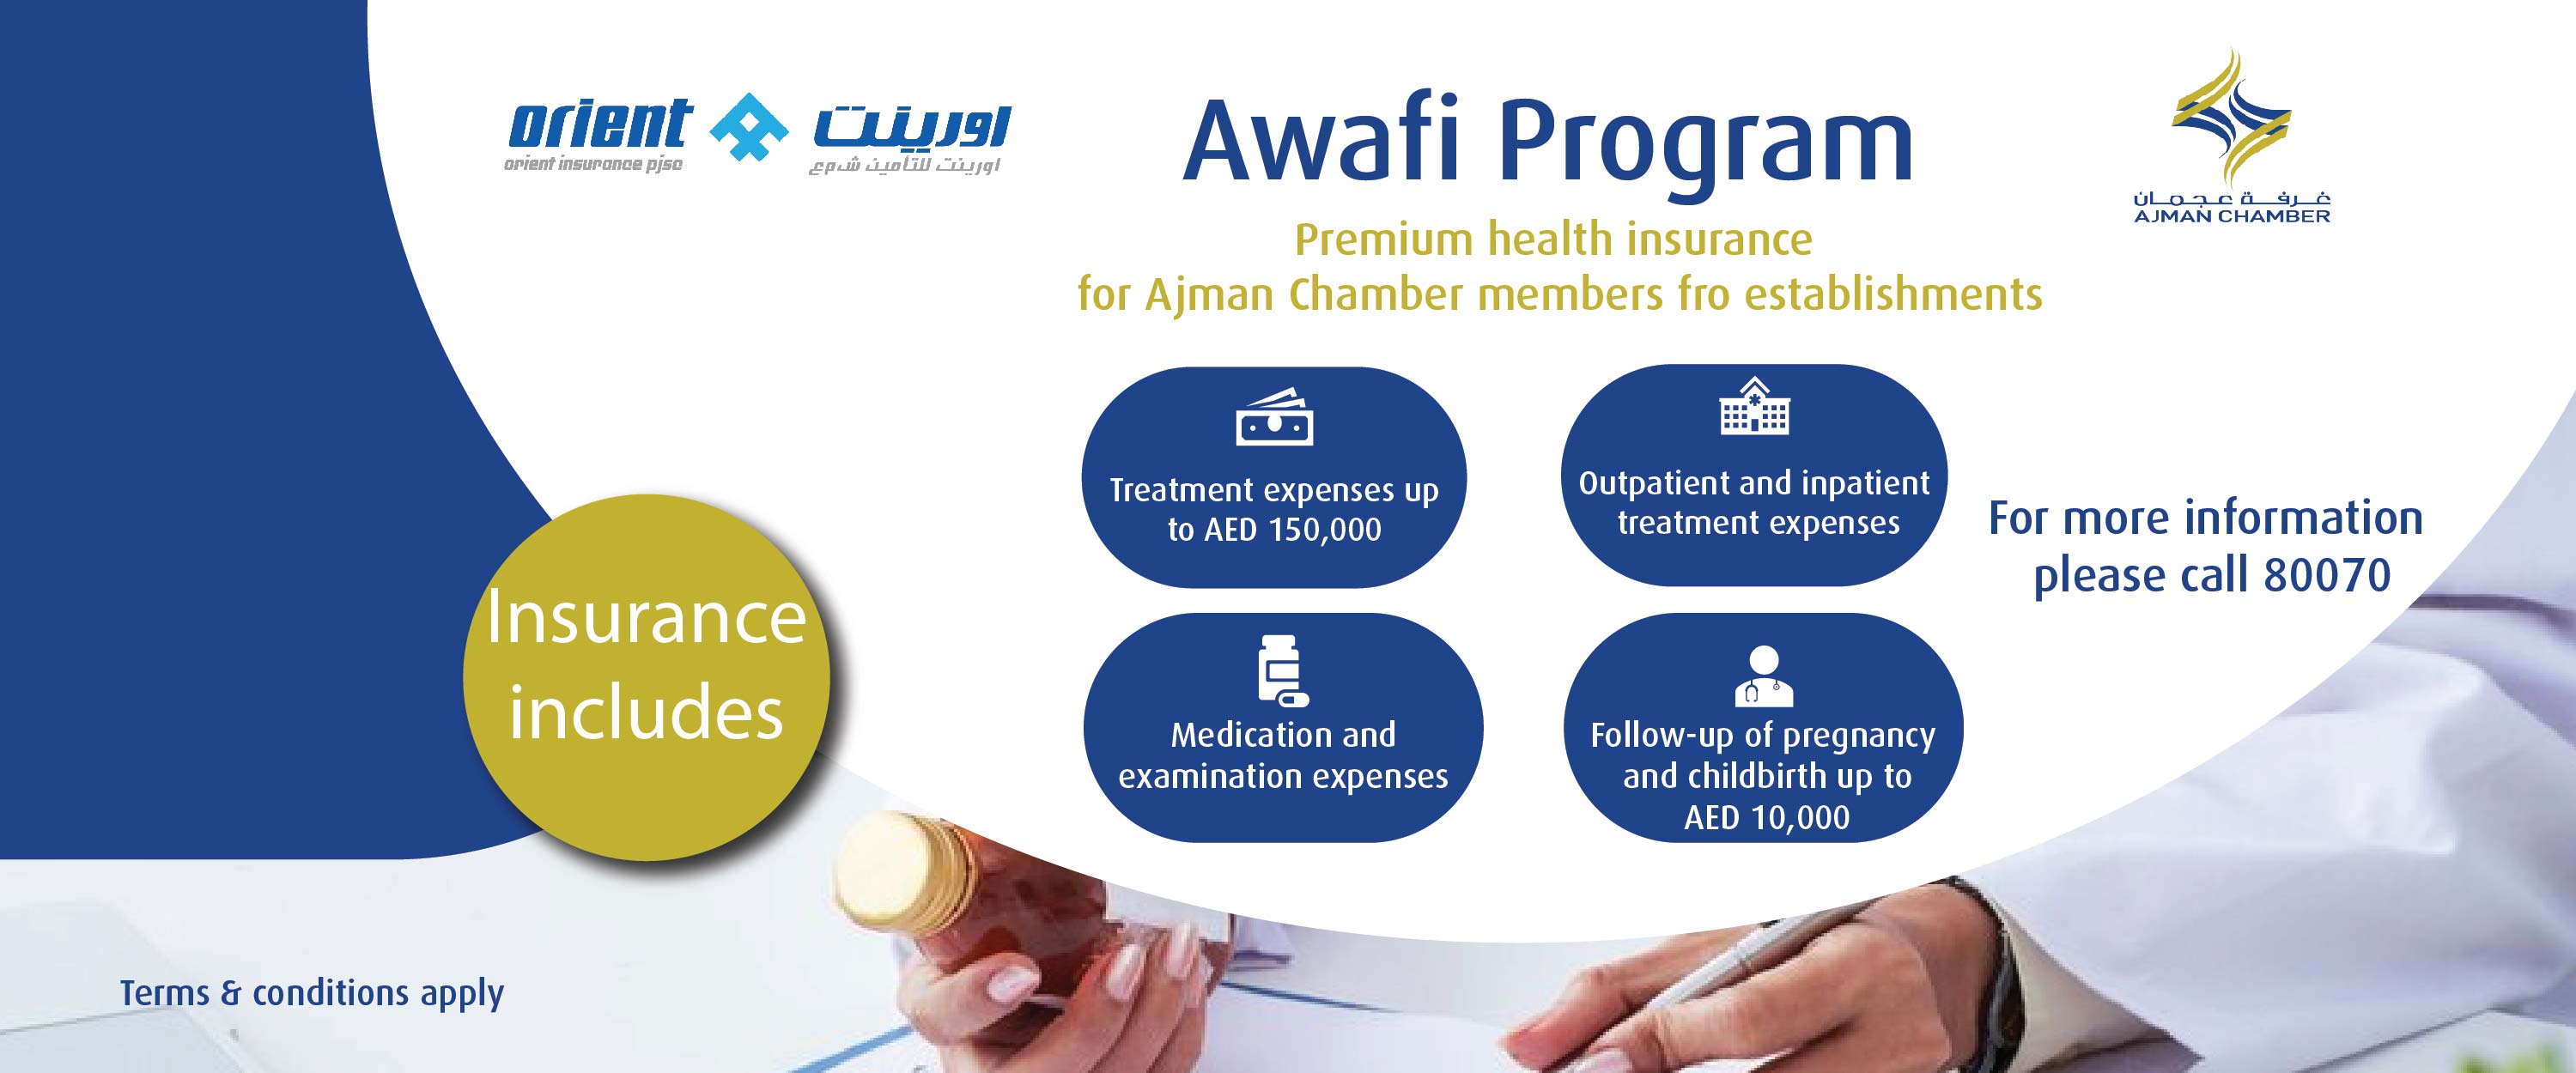 Awafi program